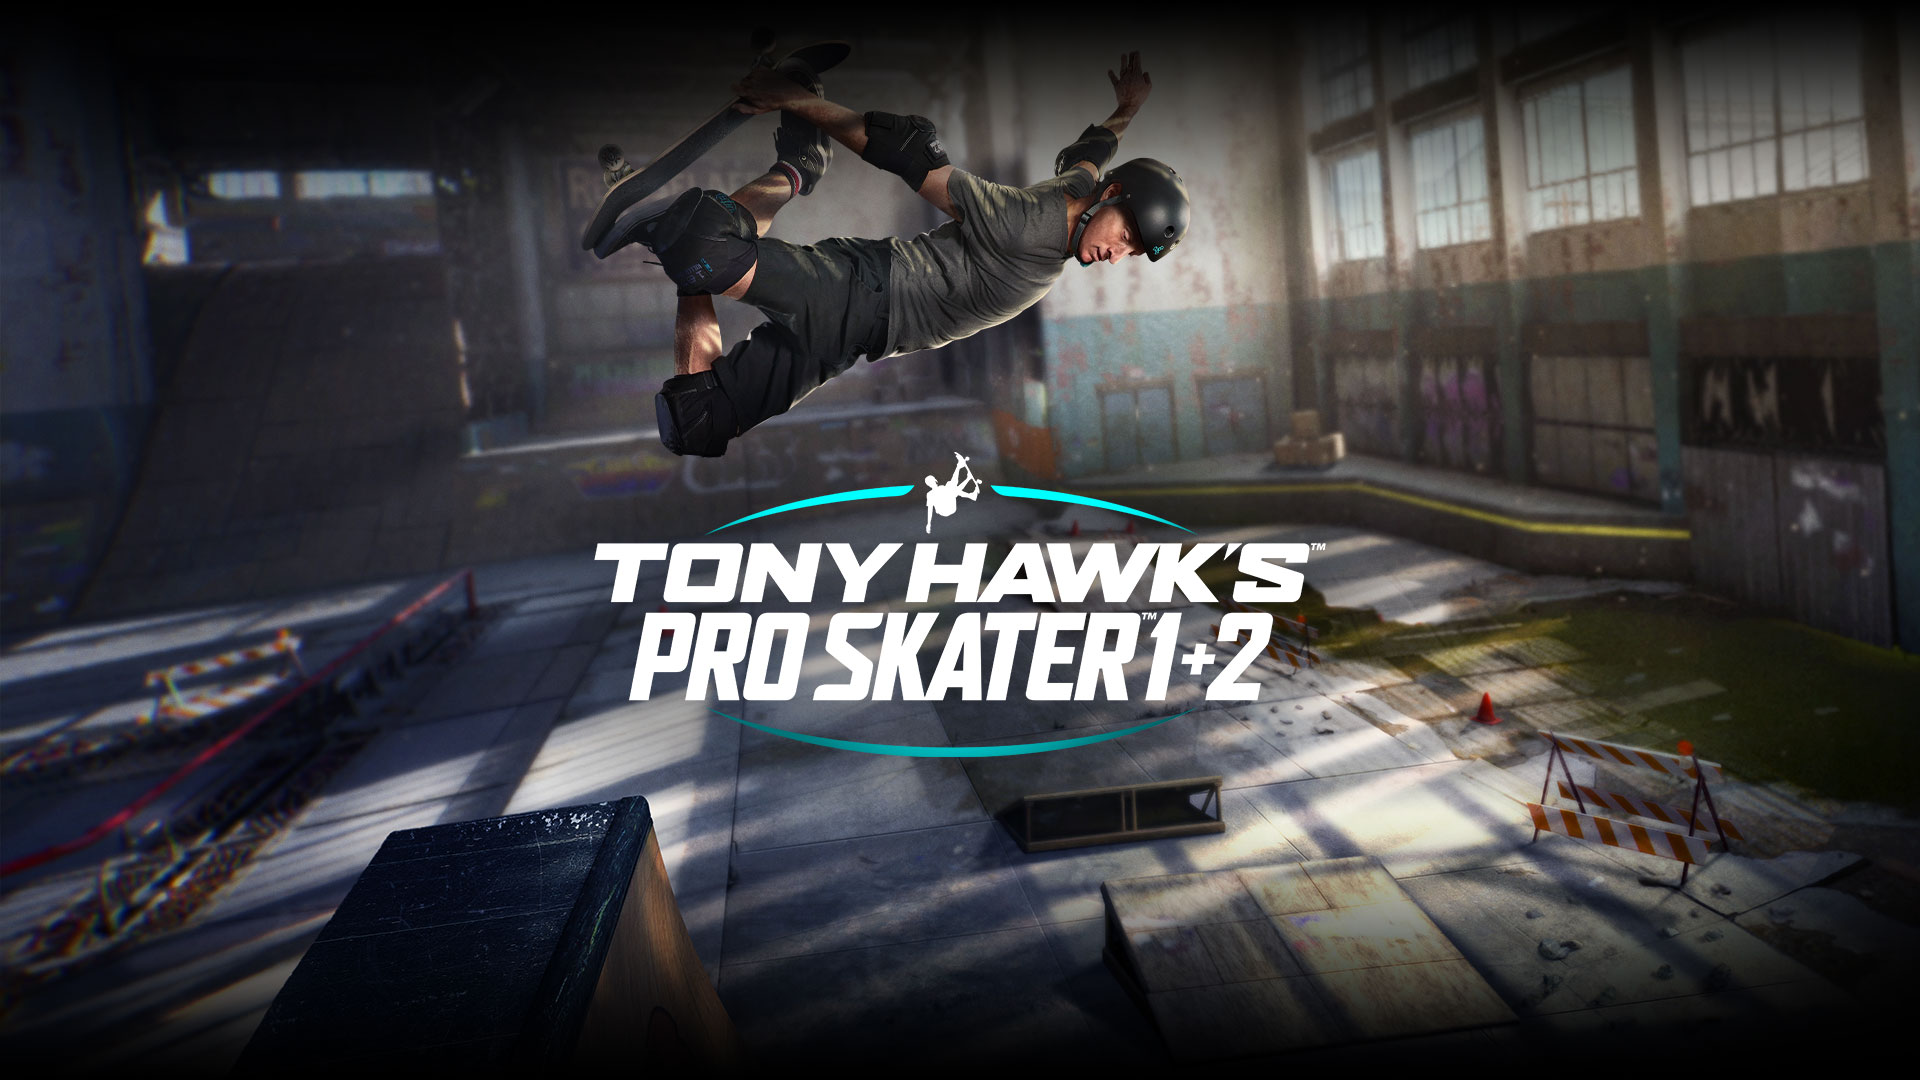 Tony Hawks Pro Skater 1+2 PC Version Full Game Free Download